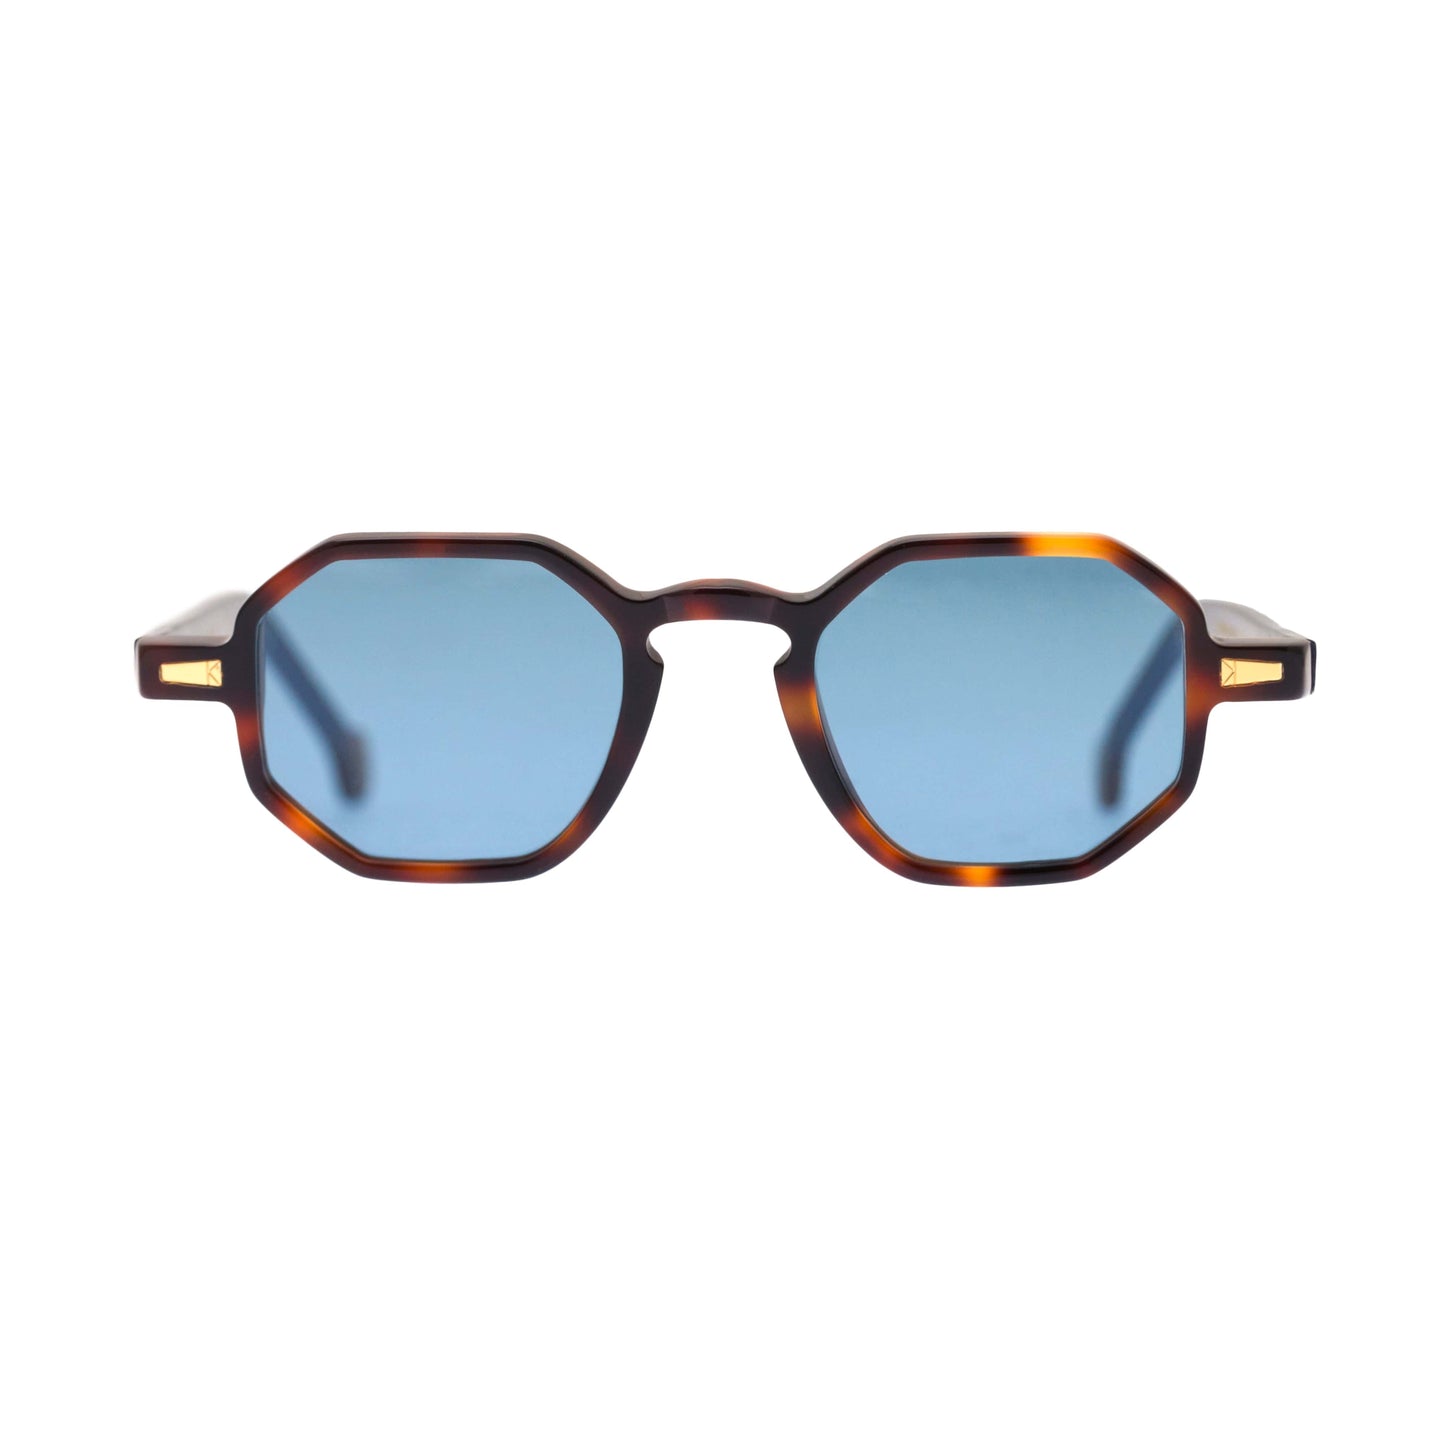 Kyme Occhiali da sole Avana - lente acquamarina Kyme Rio: occhiale da sole poligonale made in Italy